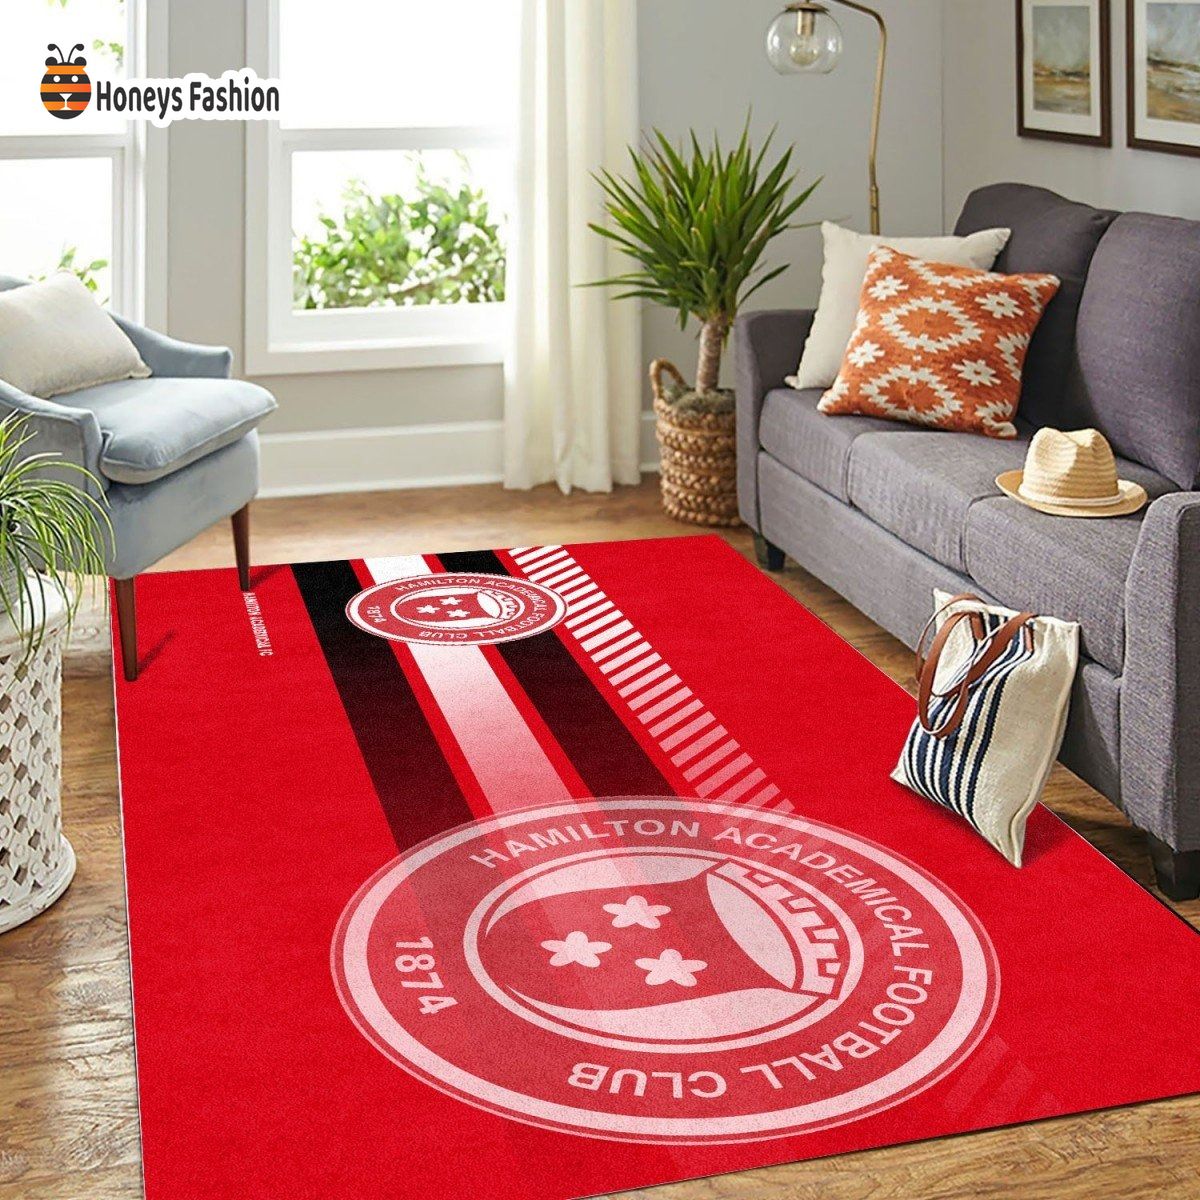 Hamilton Academical F.C Rug Carpet